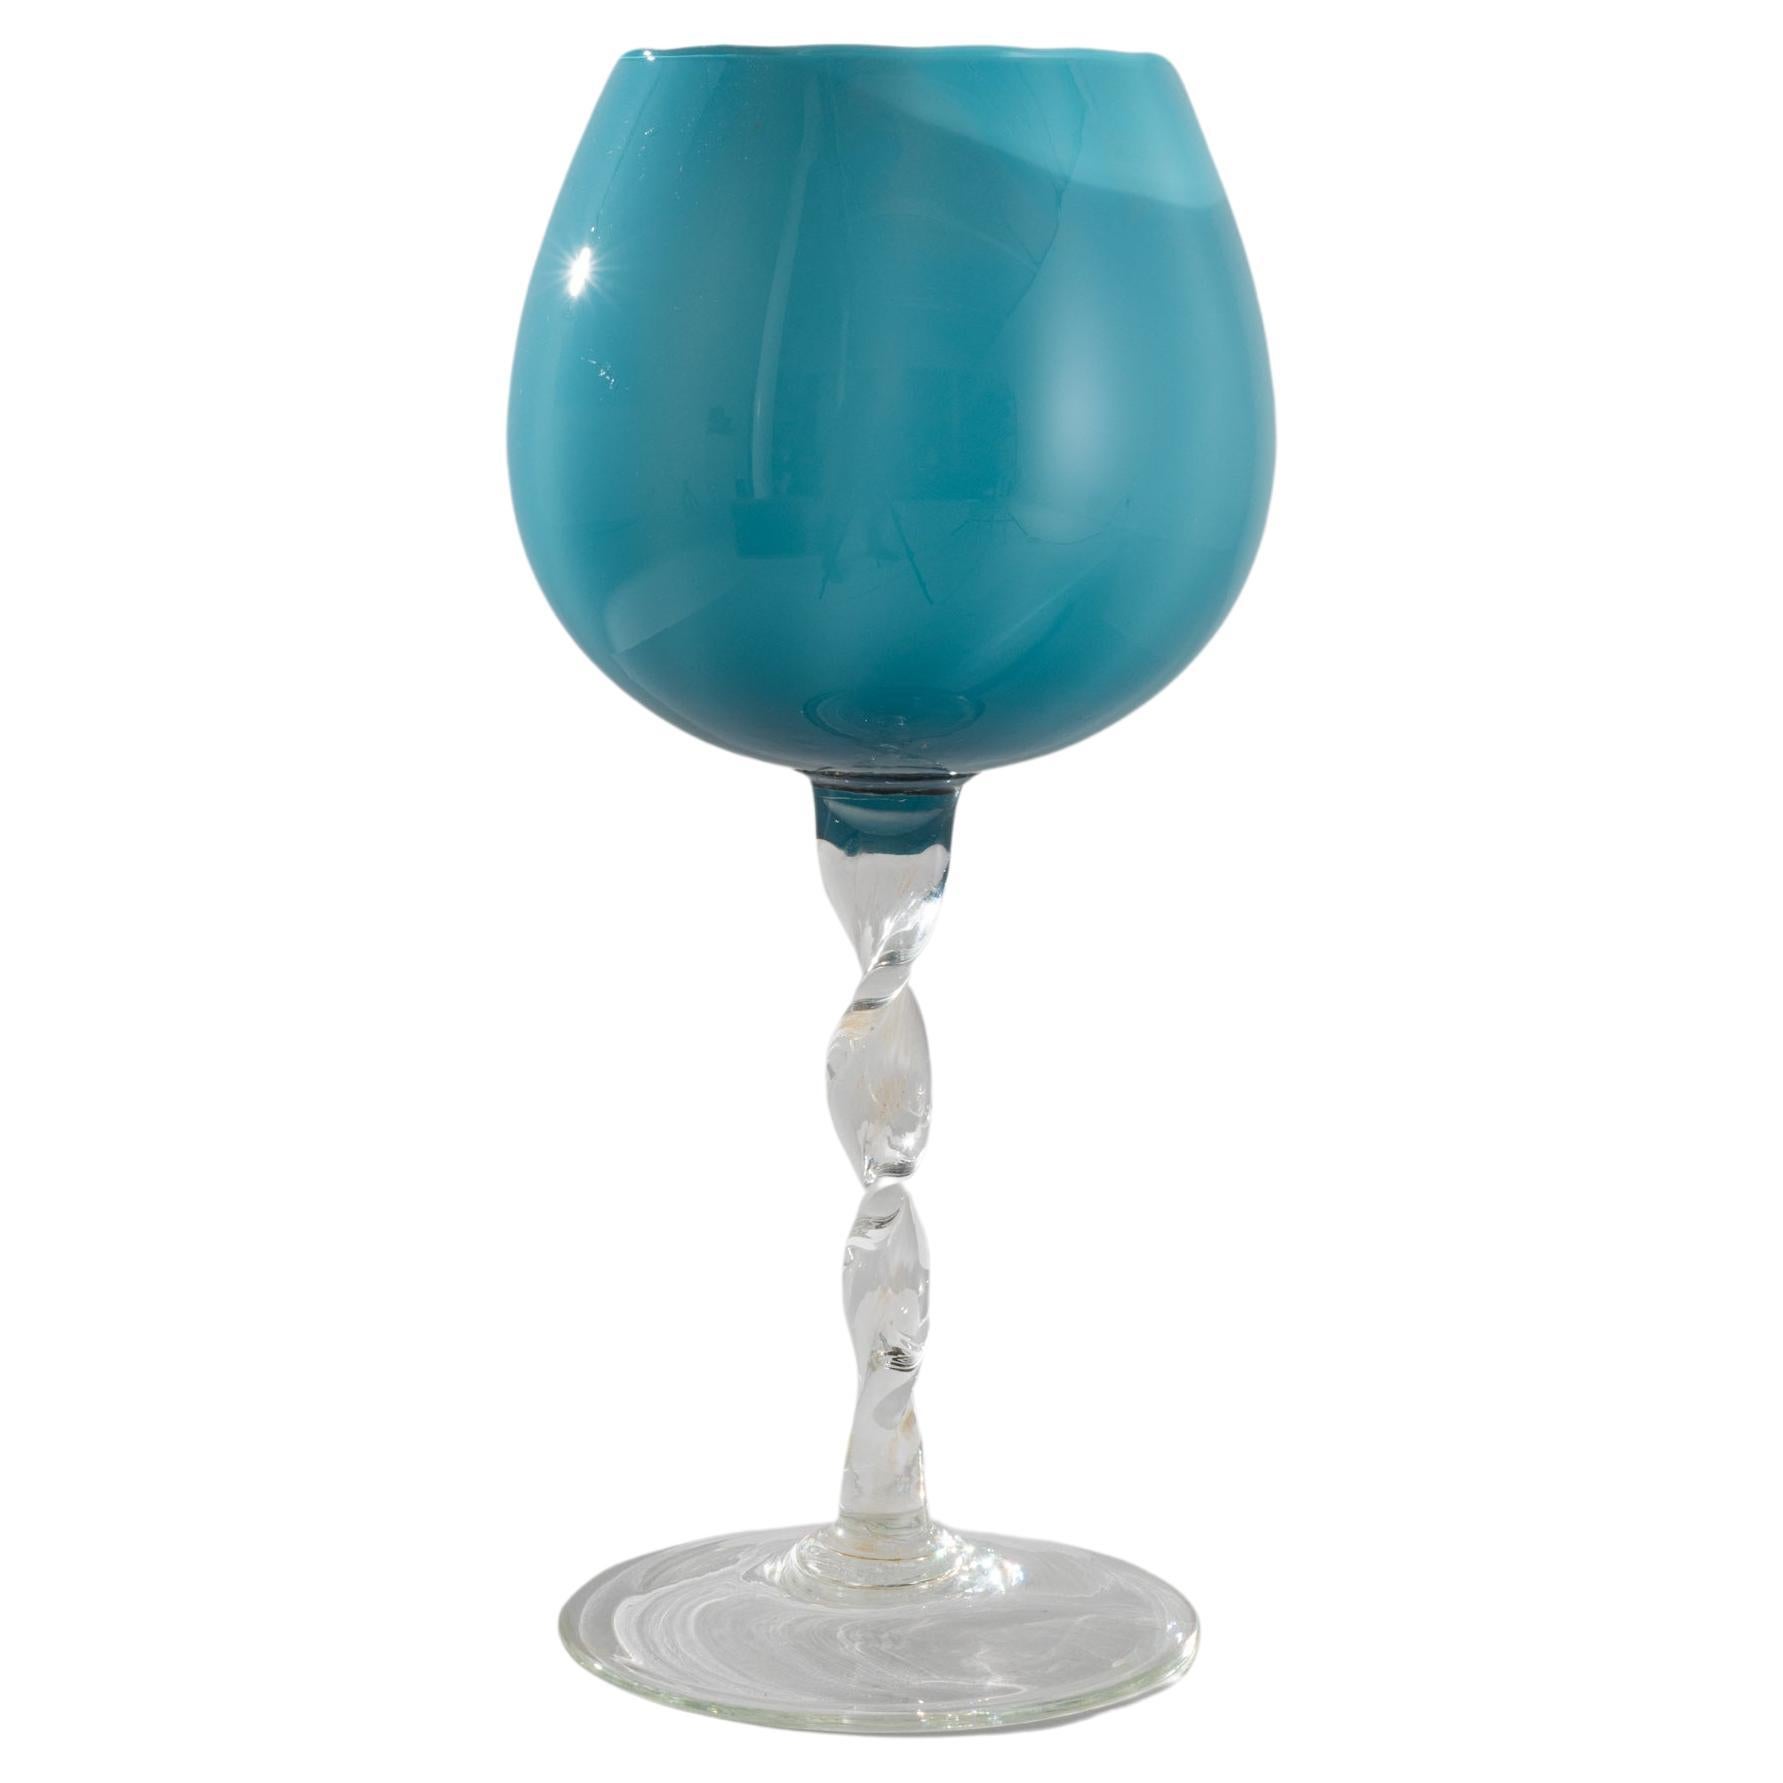 1960s Italian Teal Glass Goblet For Sale